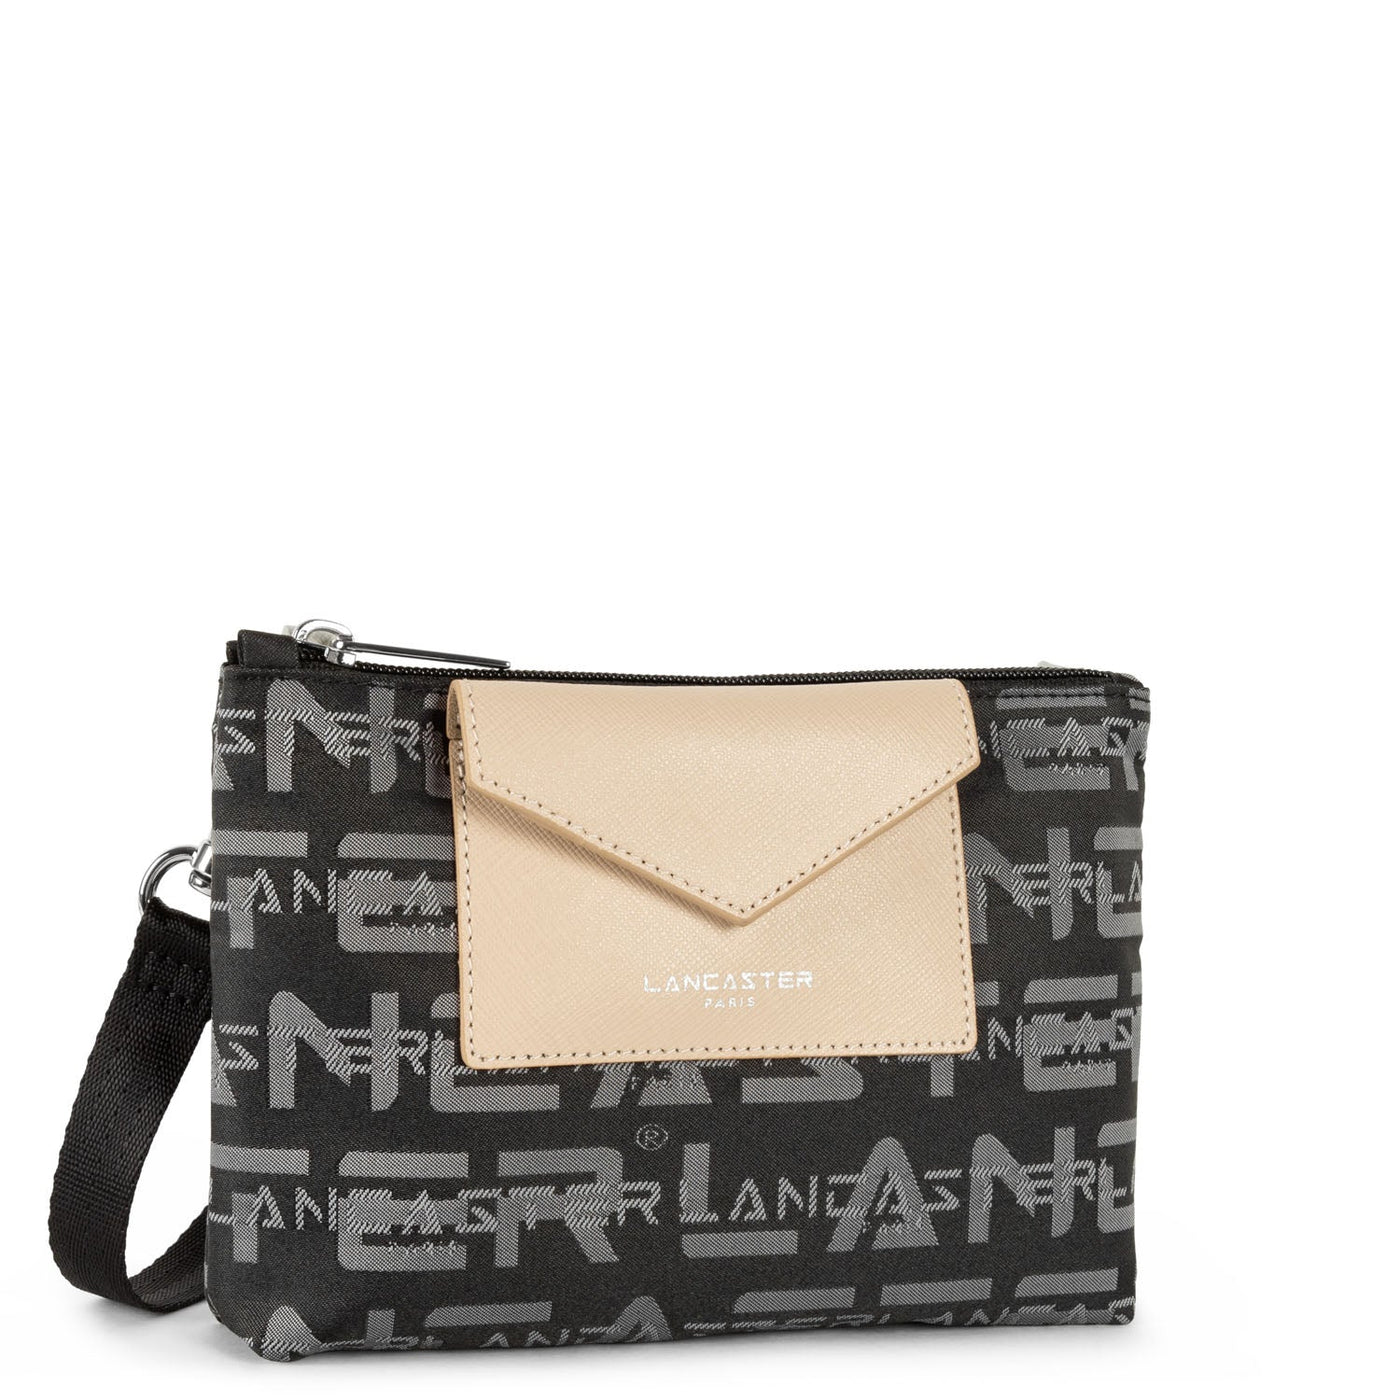 small crossbody bag - logo kba #couleur_noir-gris-poudre